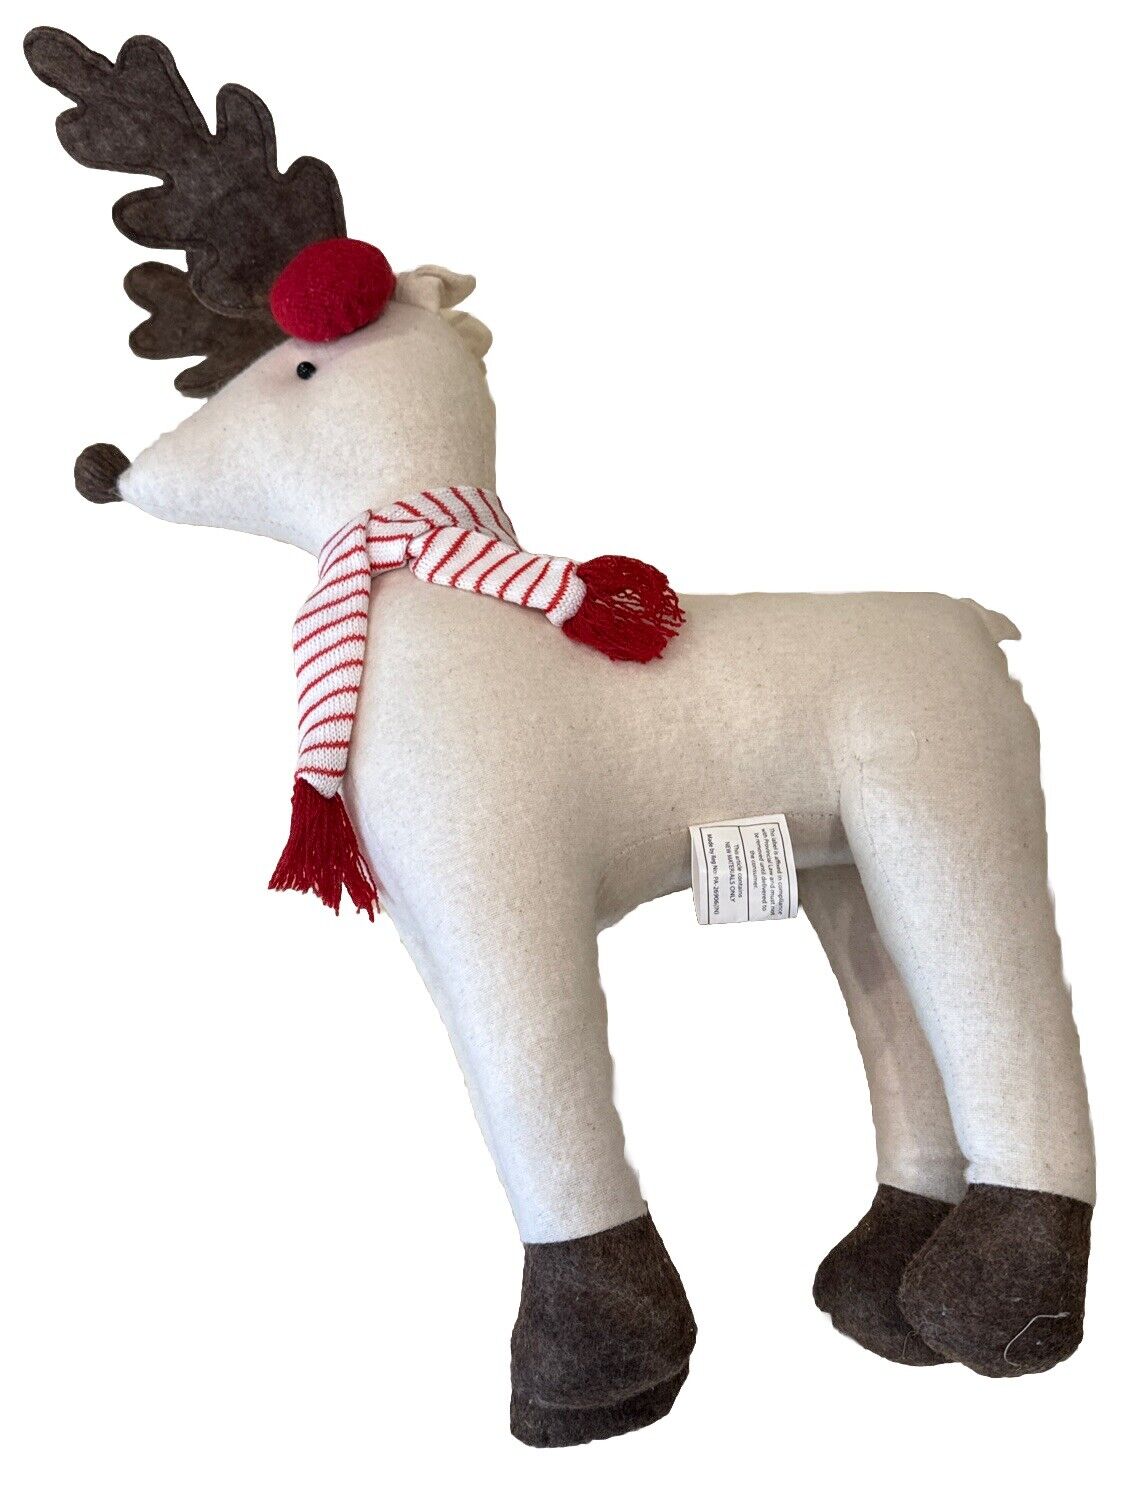 Floral Debi Lilly Plush Felt Christmas Reindeer White Striped Scarf